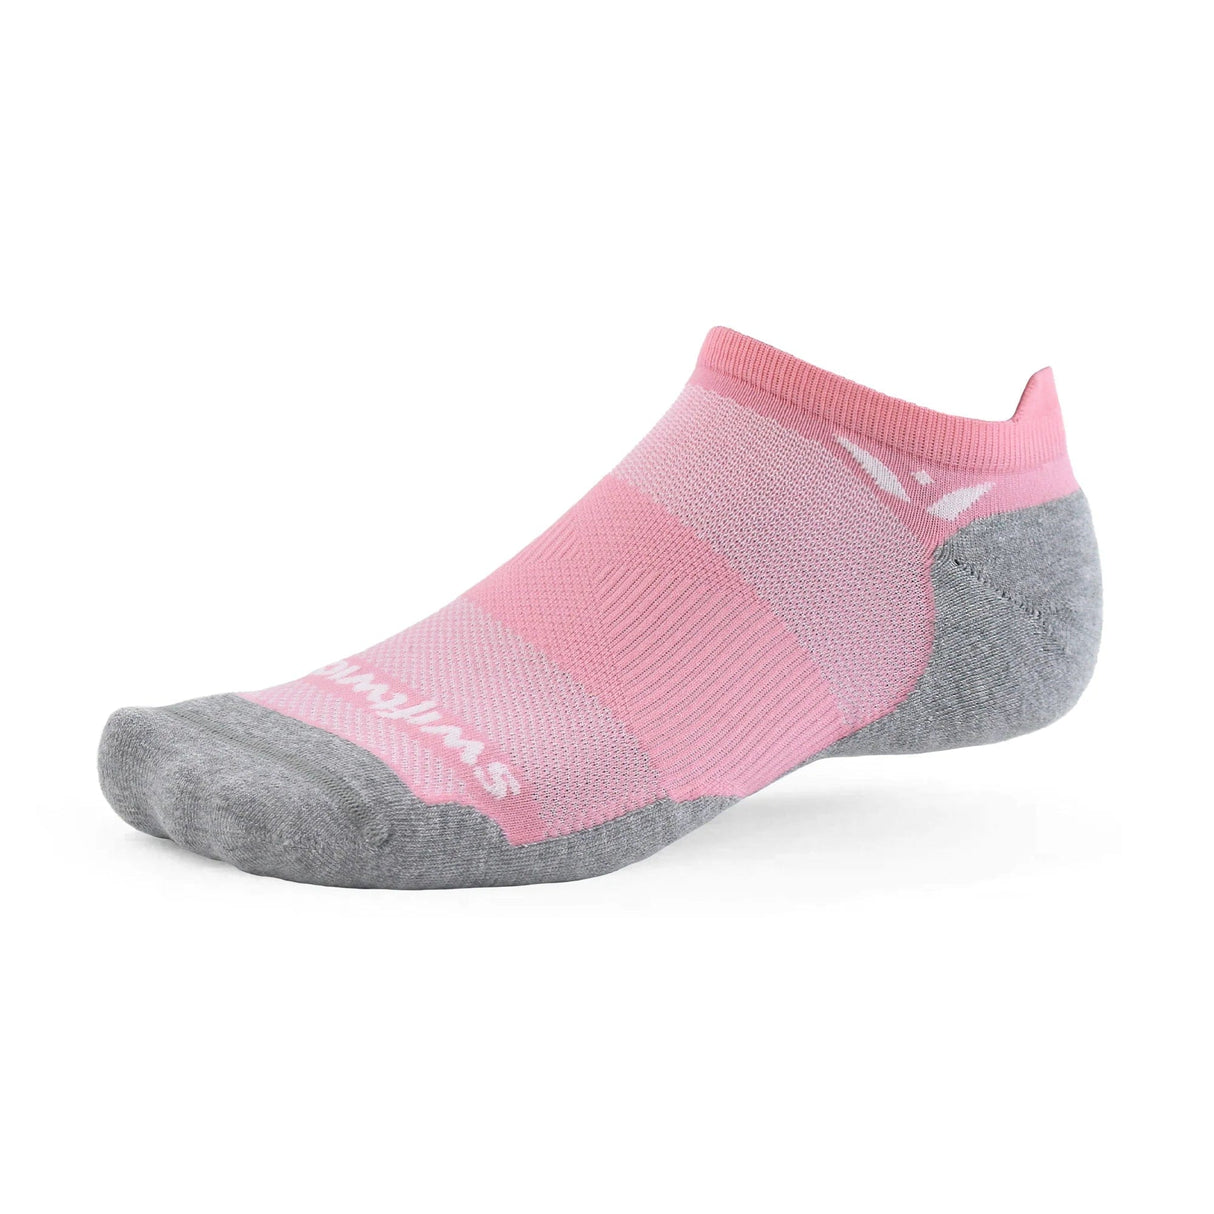 Swiftwick Maxus Zero No Show Tab Socks  -  Small / Pink Jade